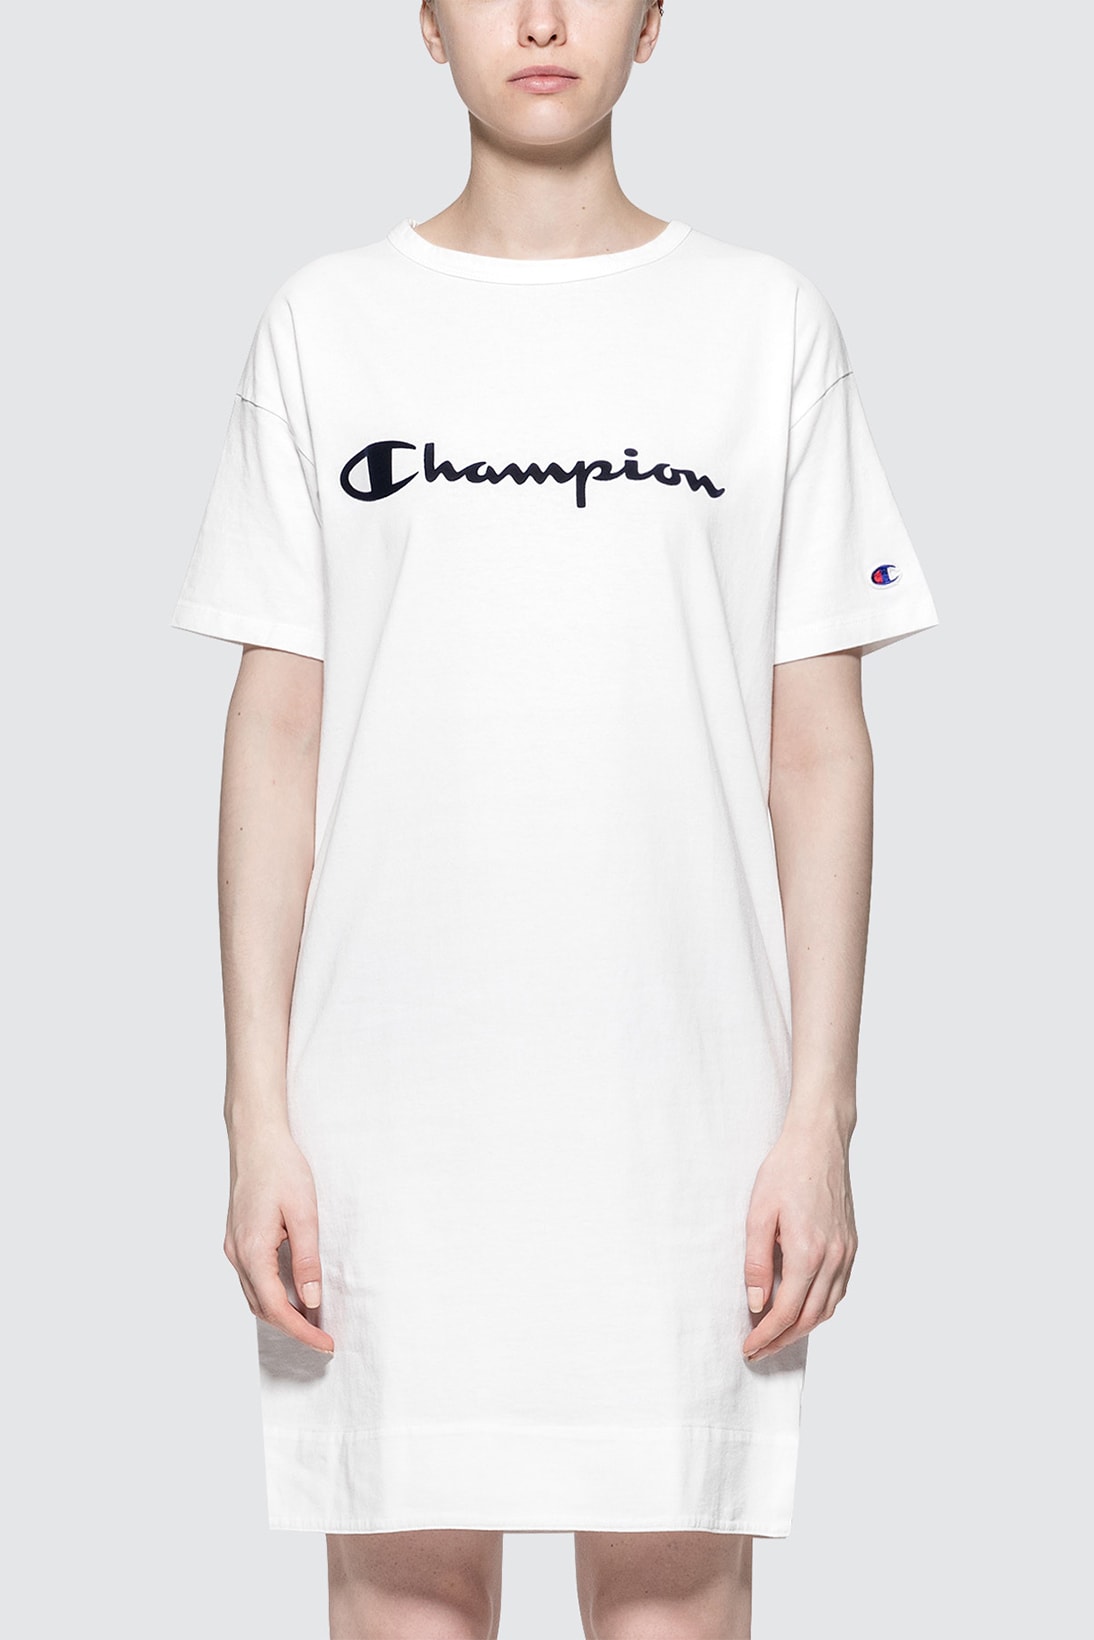 Champion Japan Logo T-Shirt Dress White Oversized Shift Women's Athletic Sporty Where to Buy HBX